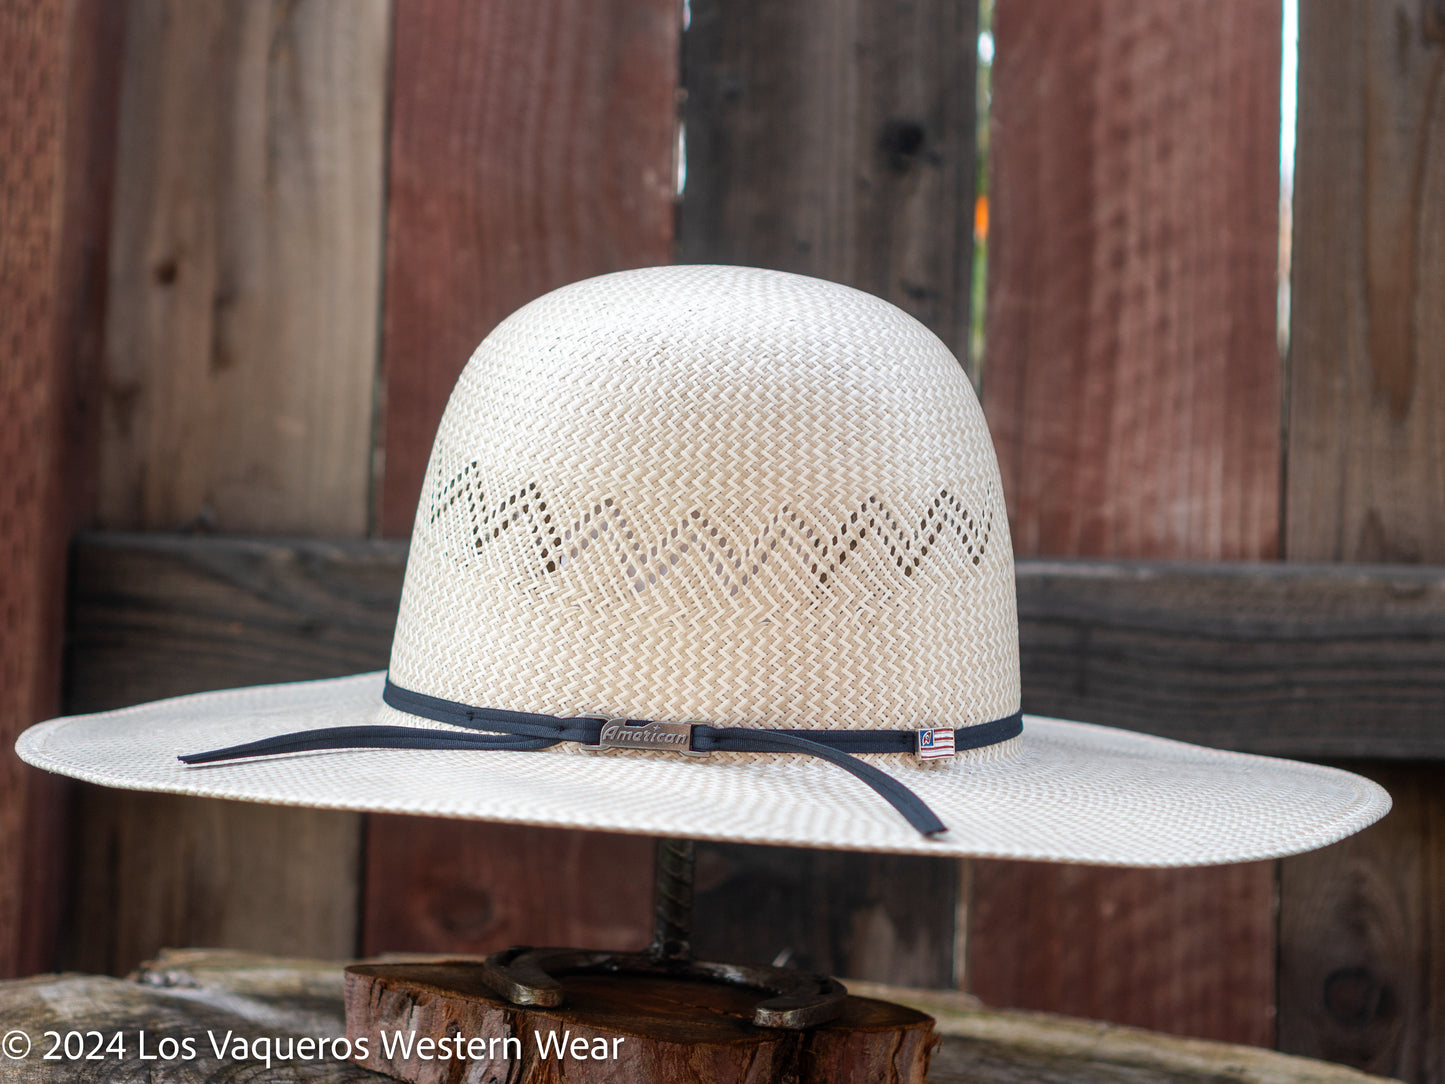 American Hat Company Straw Hat Regular Wave Wheat Tan White